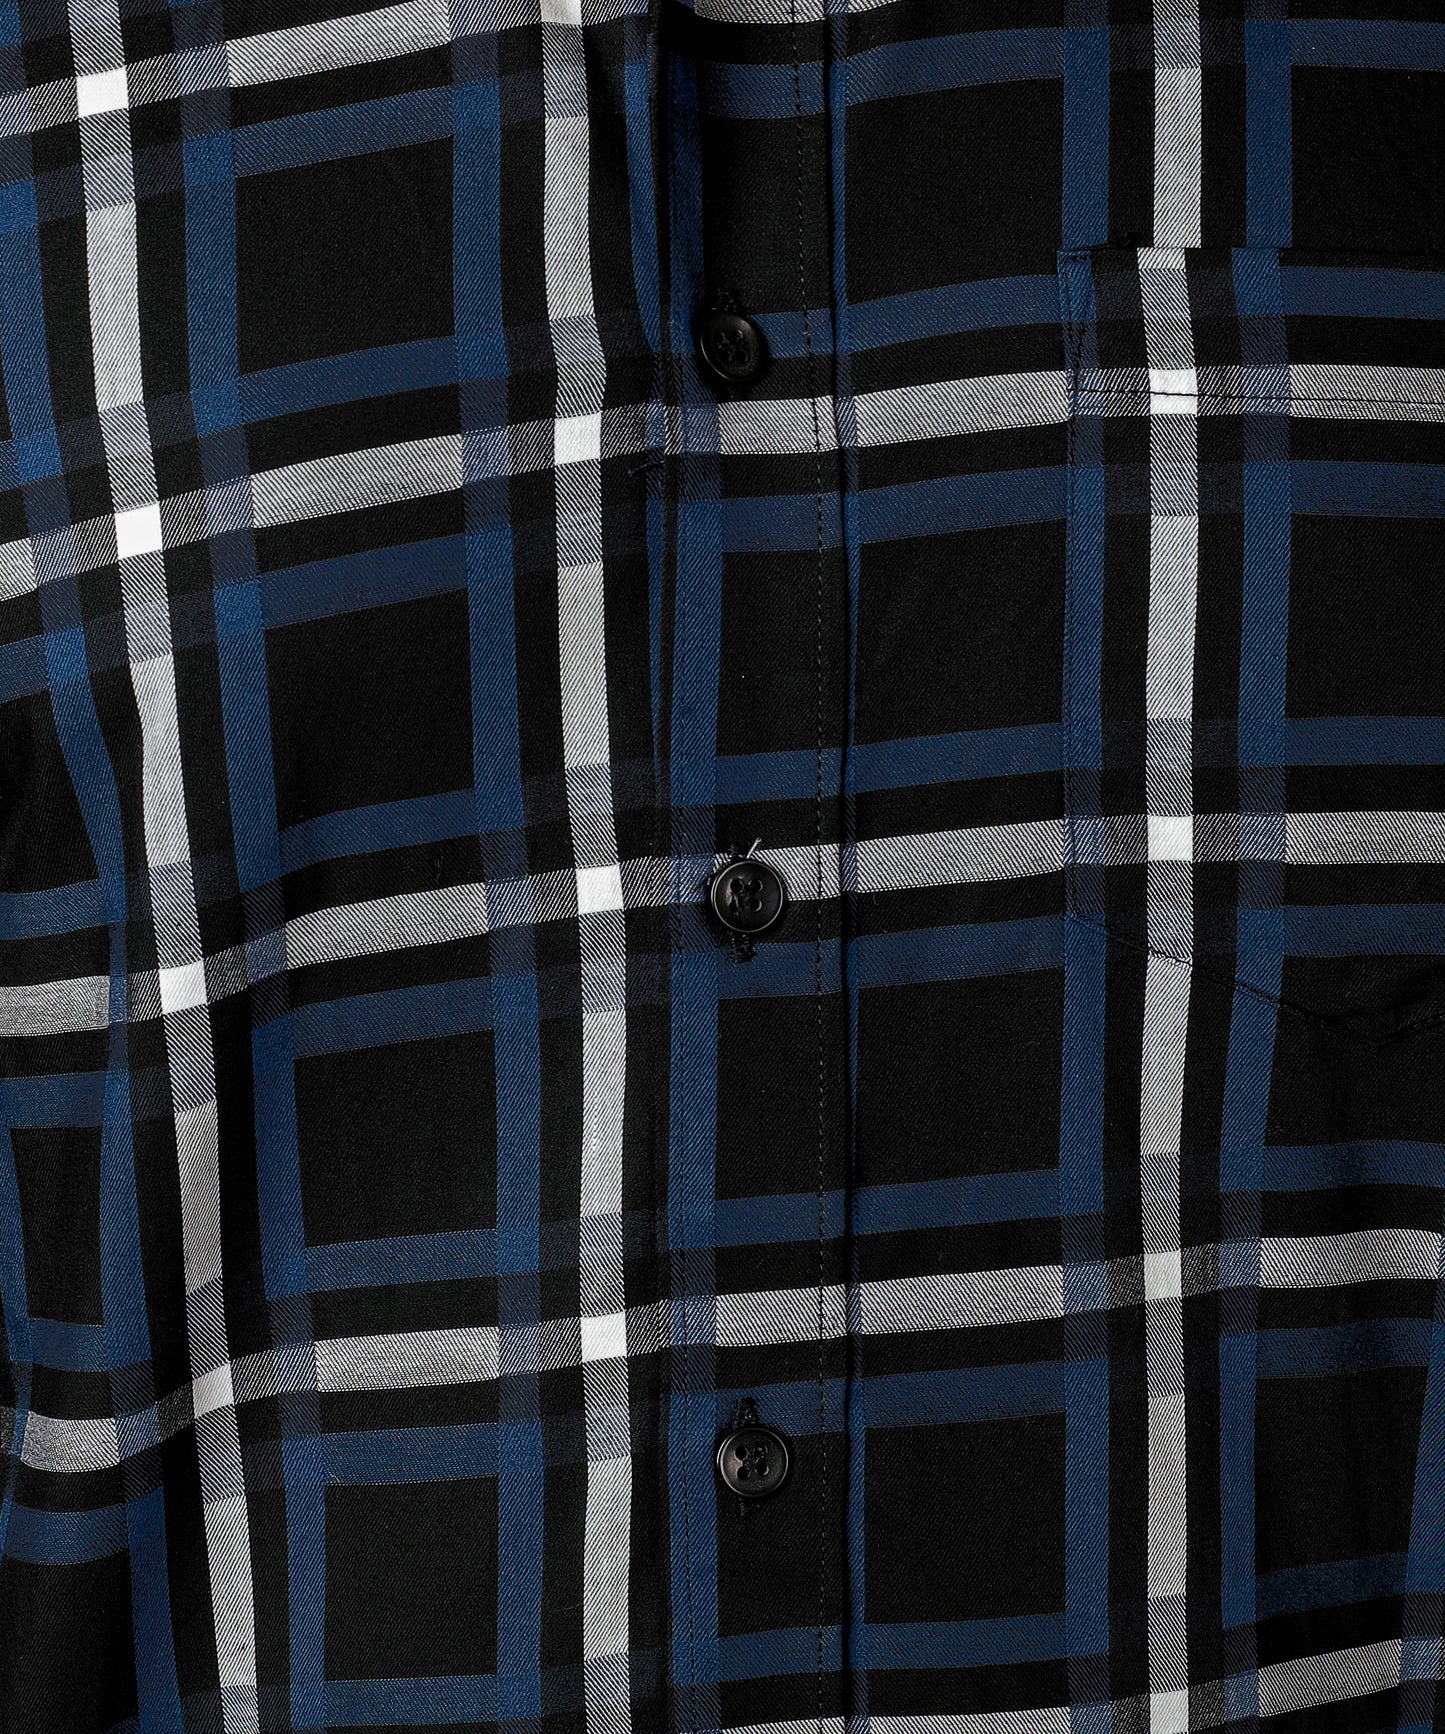 5thanfold Men's Formal Pure Cotton Full Sleeve Checkered Navy blue Regular Fit Shirt